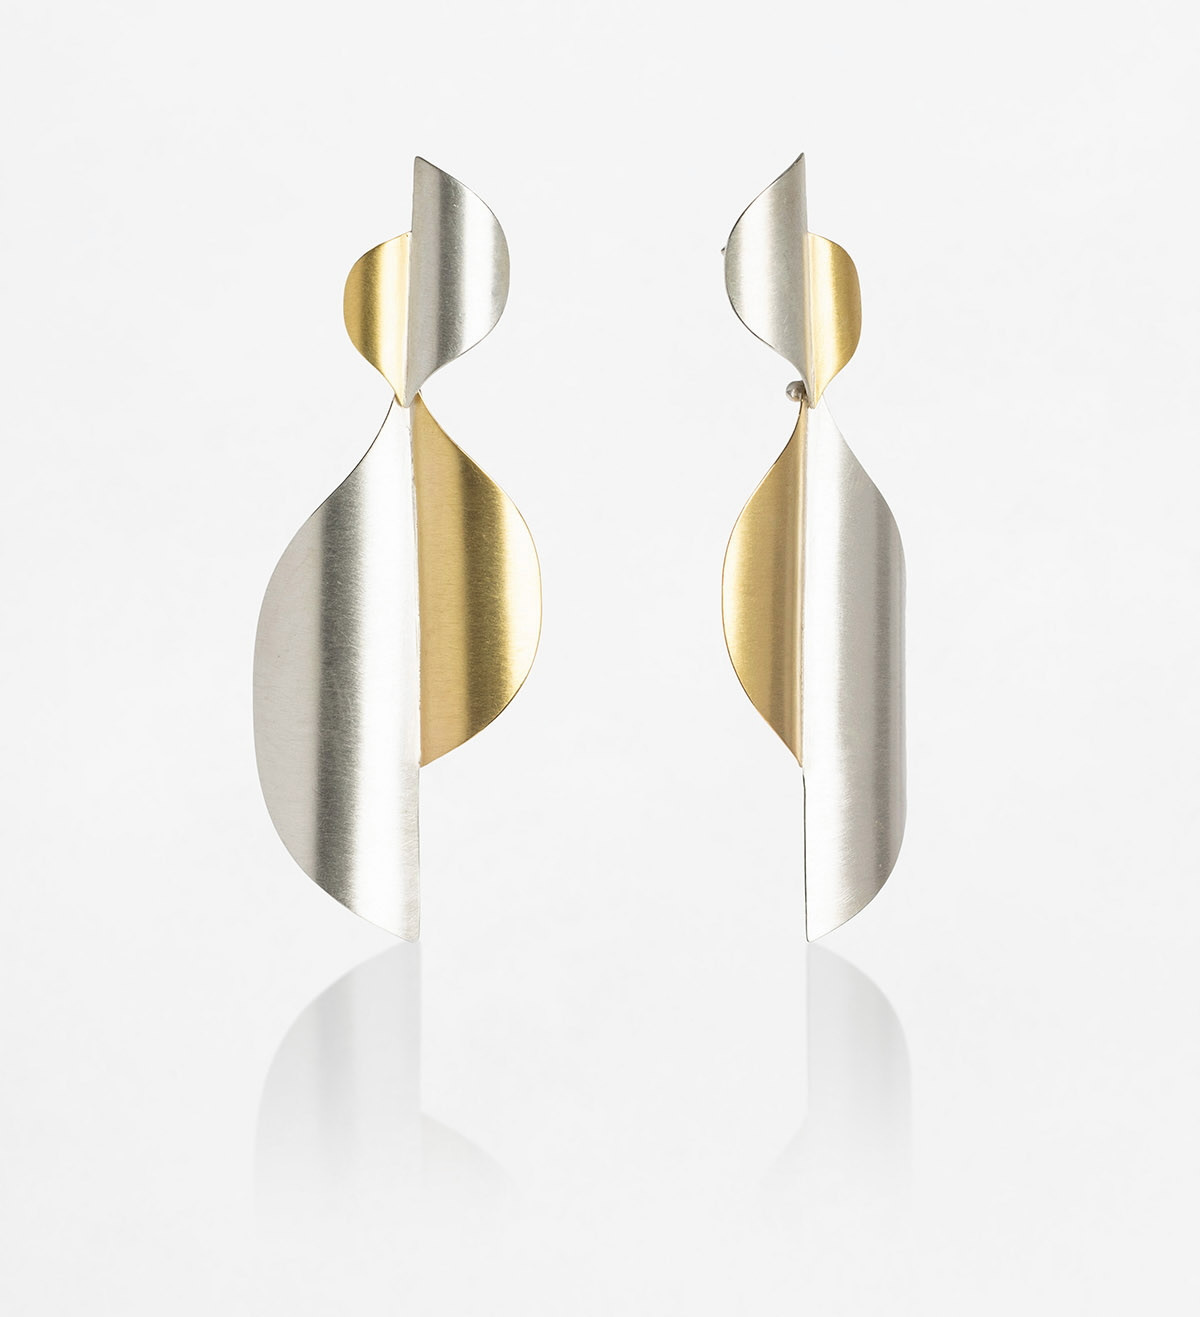 18k gold and silver earrings Seda 65mm